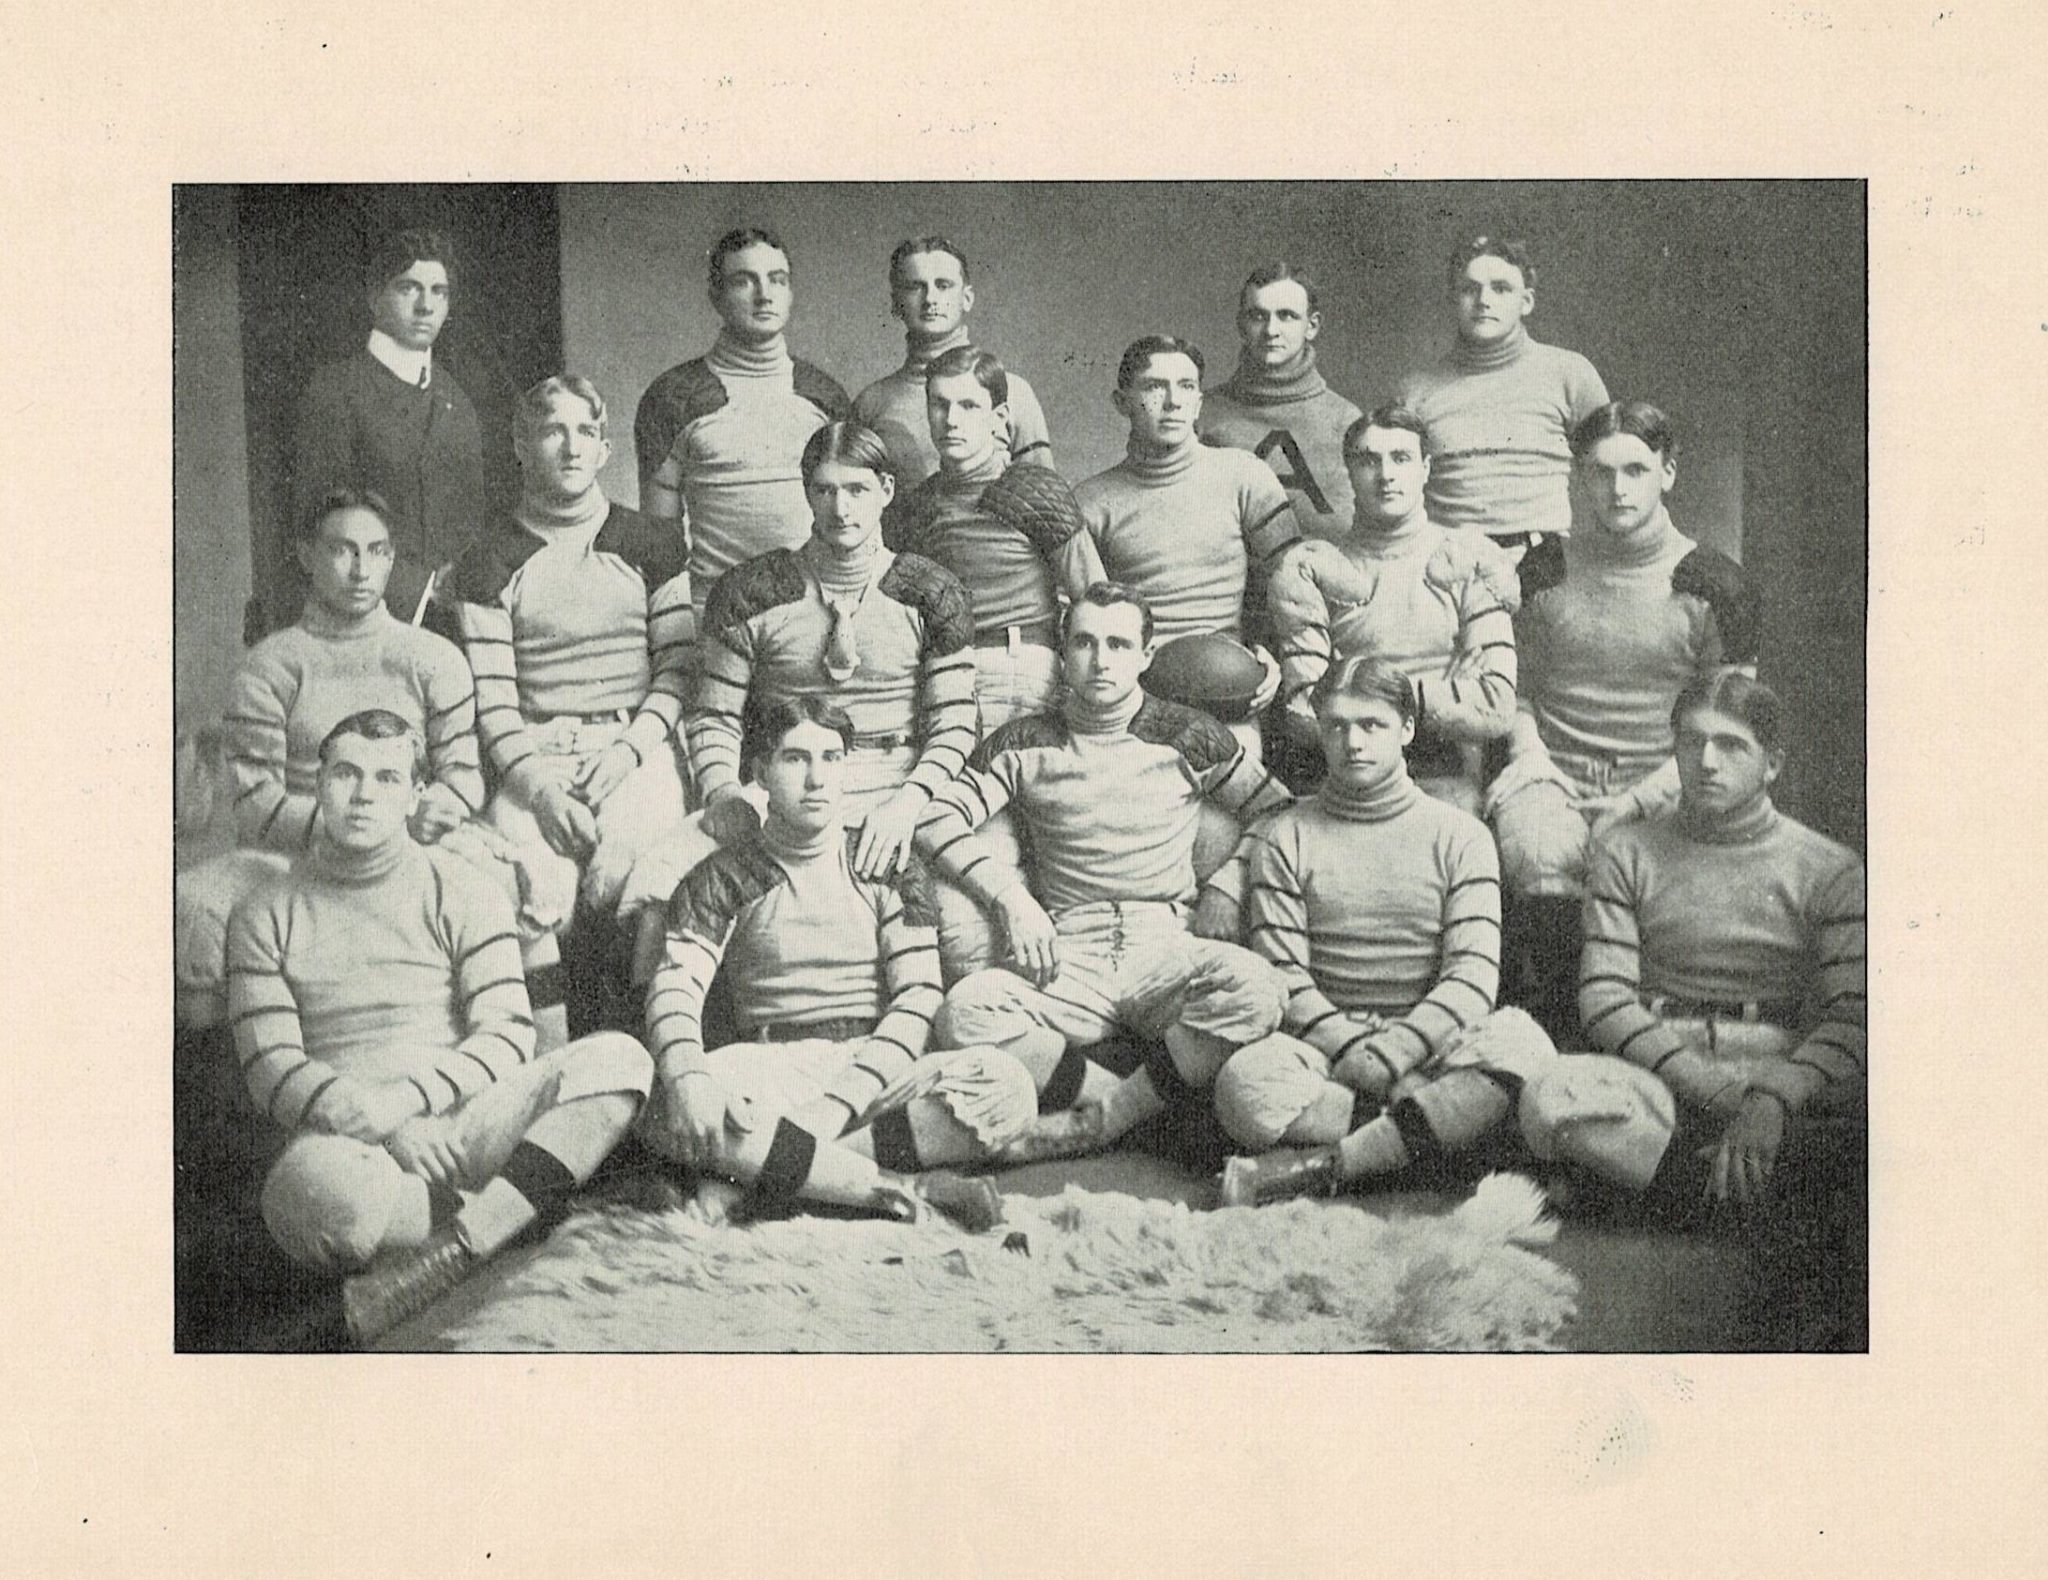 University of Arizona Football Team 1902/1903